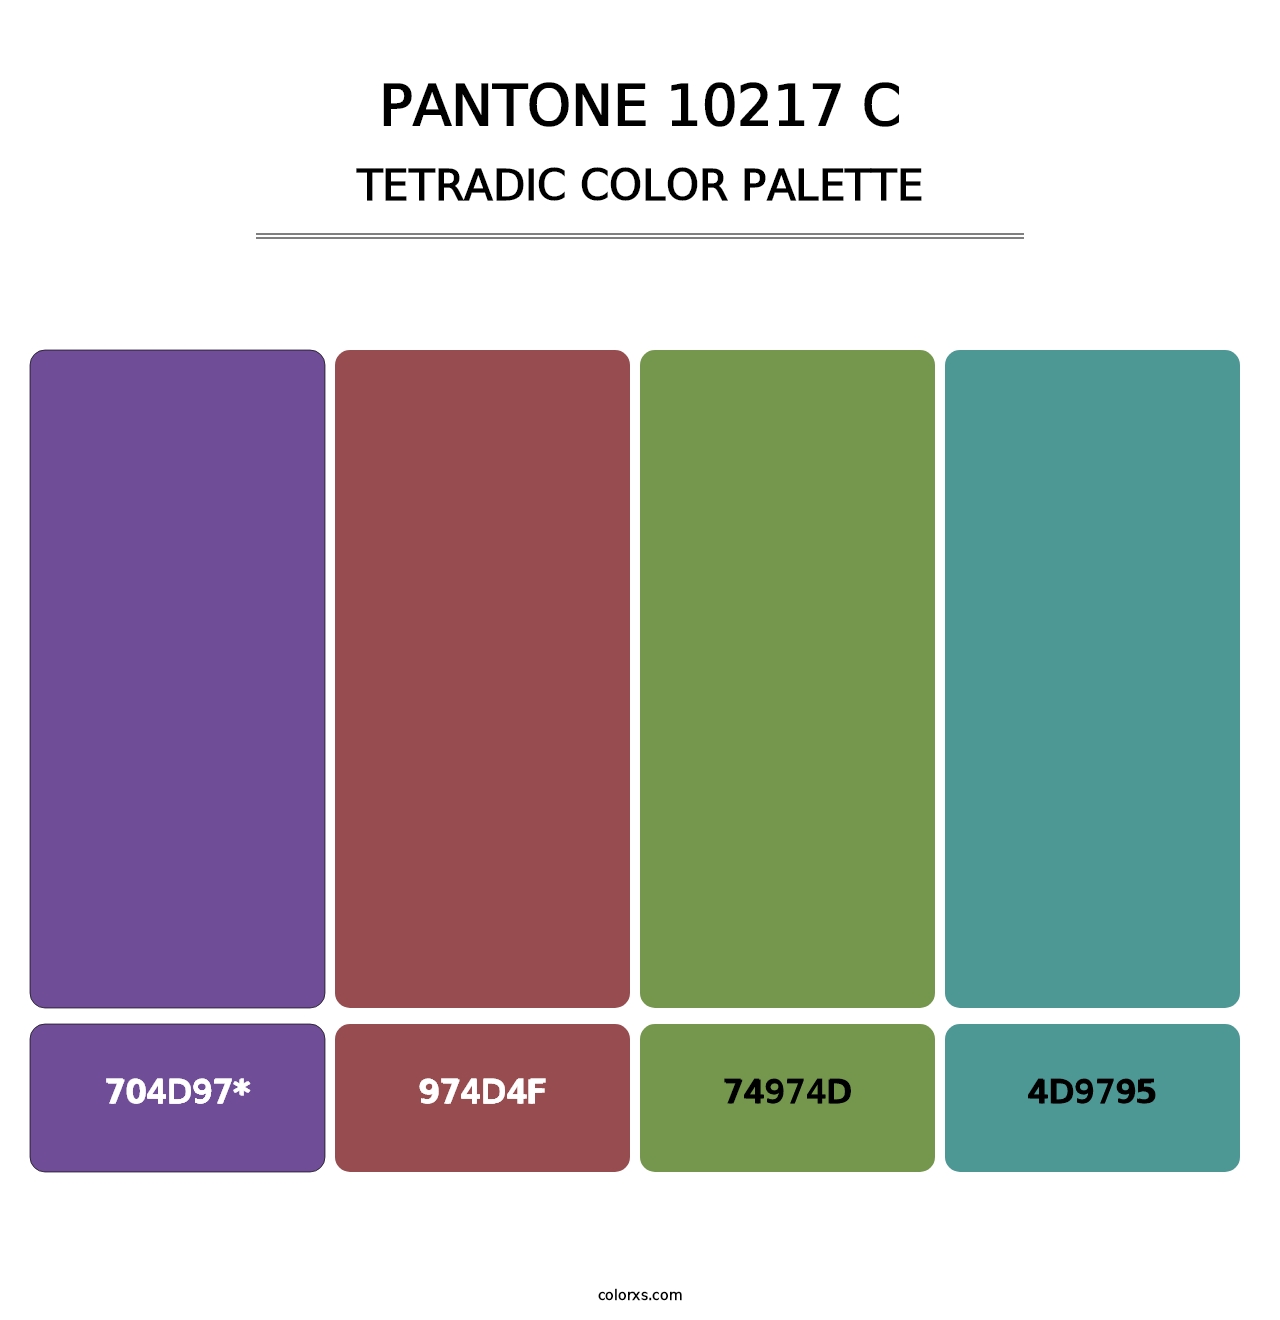 PANTONE 10217 C - Tetradic Color Palette